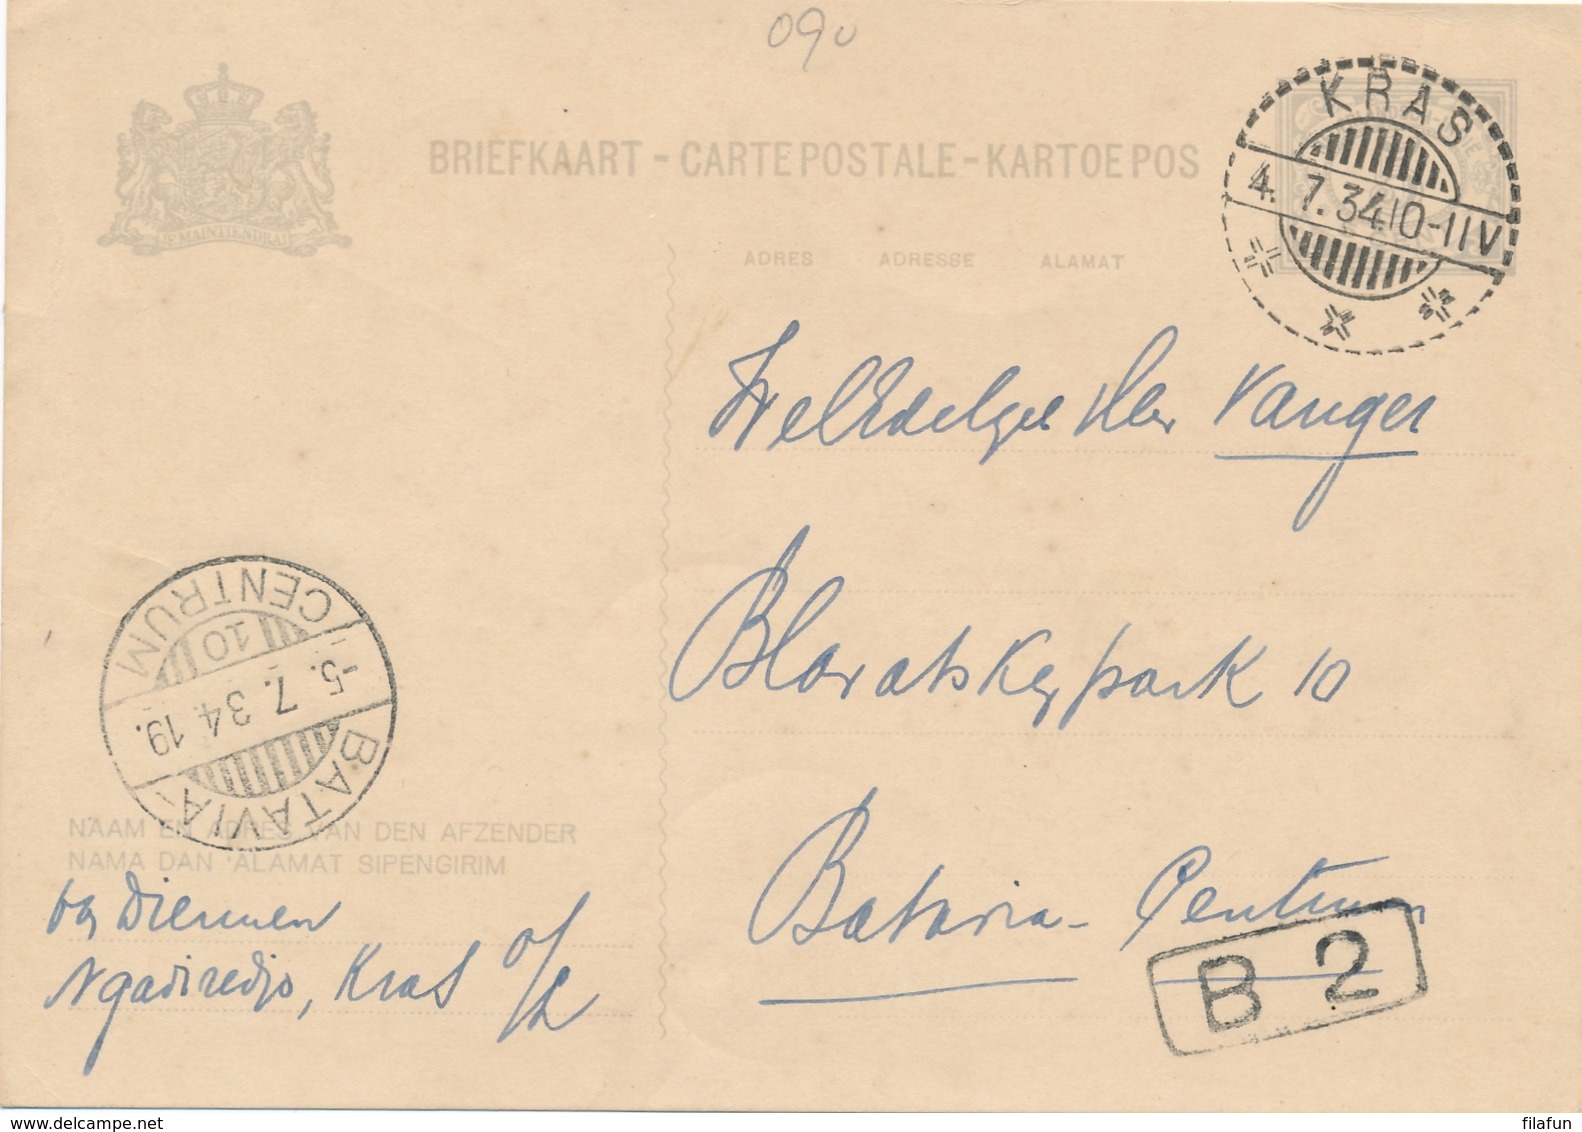 Nederlands Indië - 1934 - 5 Cent Cijfer, Briefkaart G54a Van LB KRAS Naar BataviaCentrum/10 - Nederlands-Indië